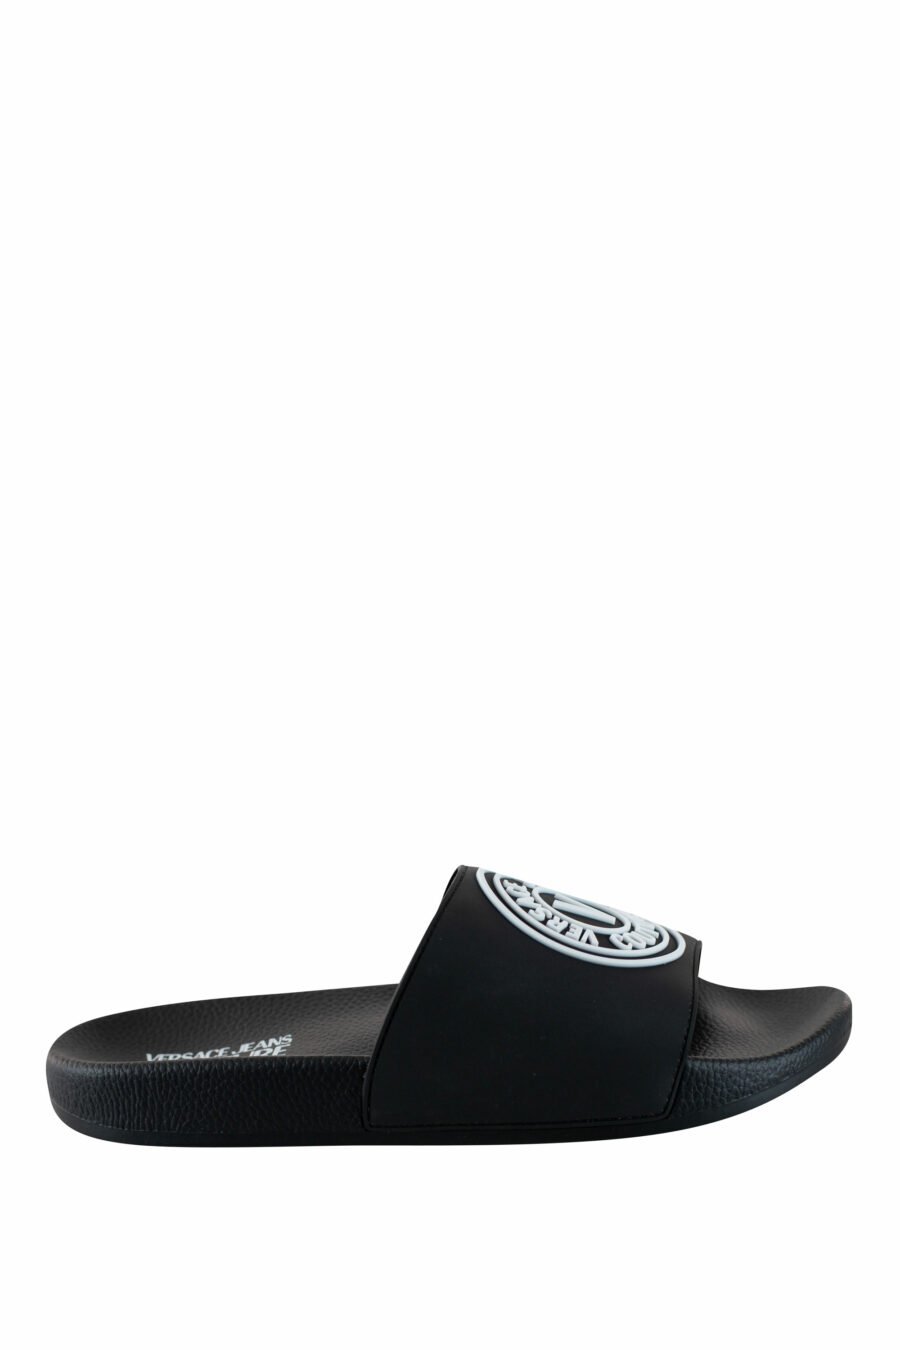 Black flip flops with black circular maxilogo - IMG 4425